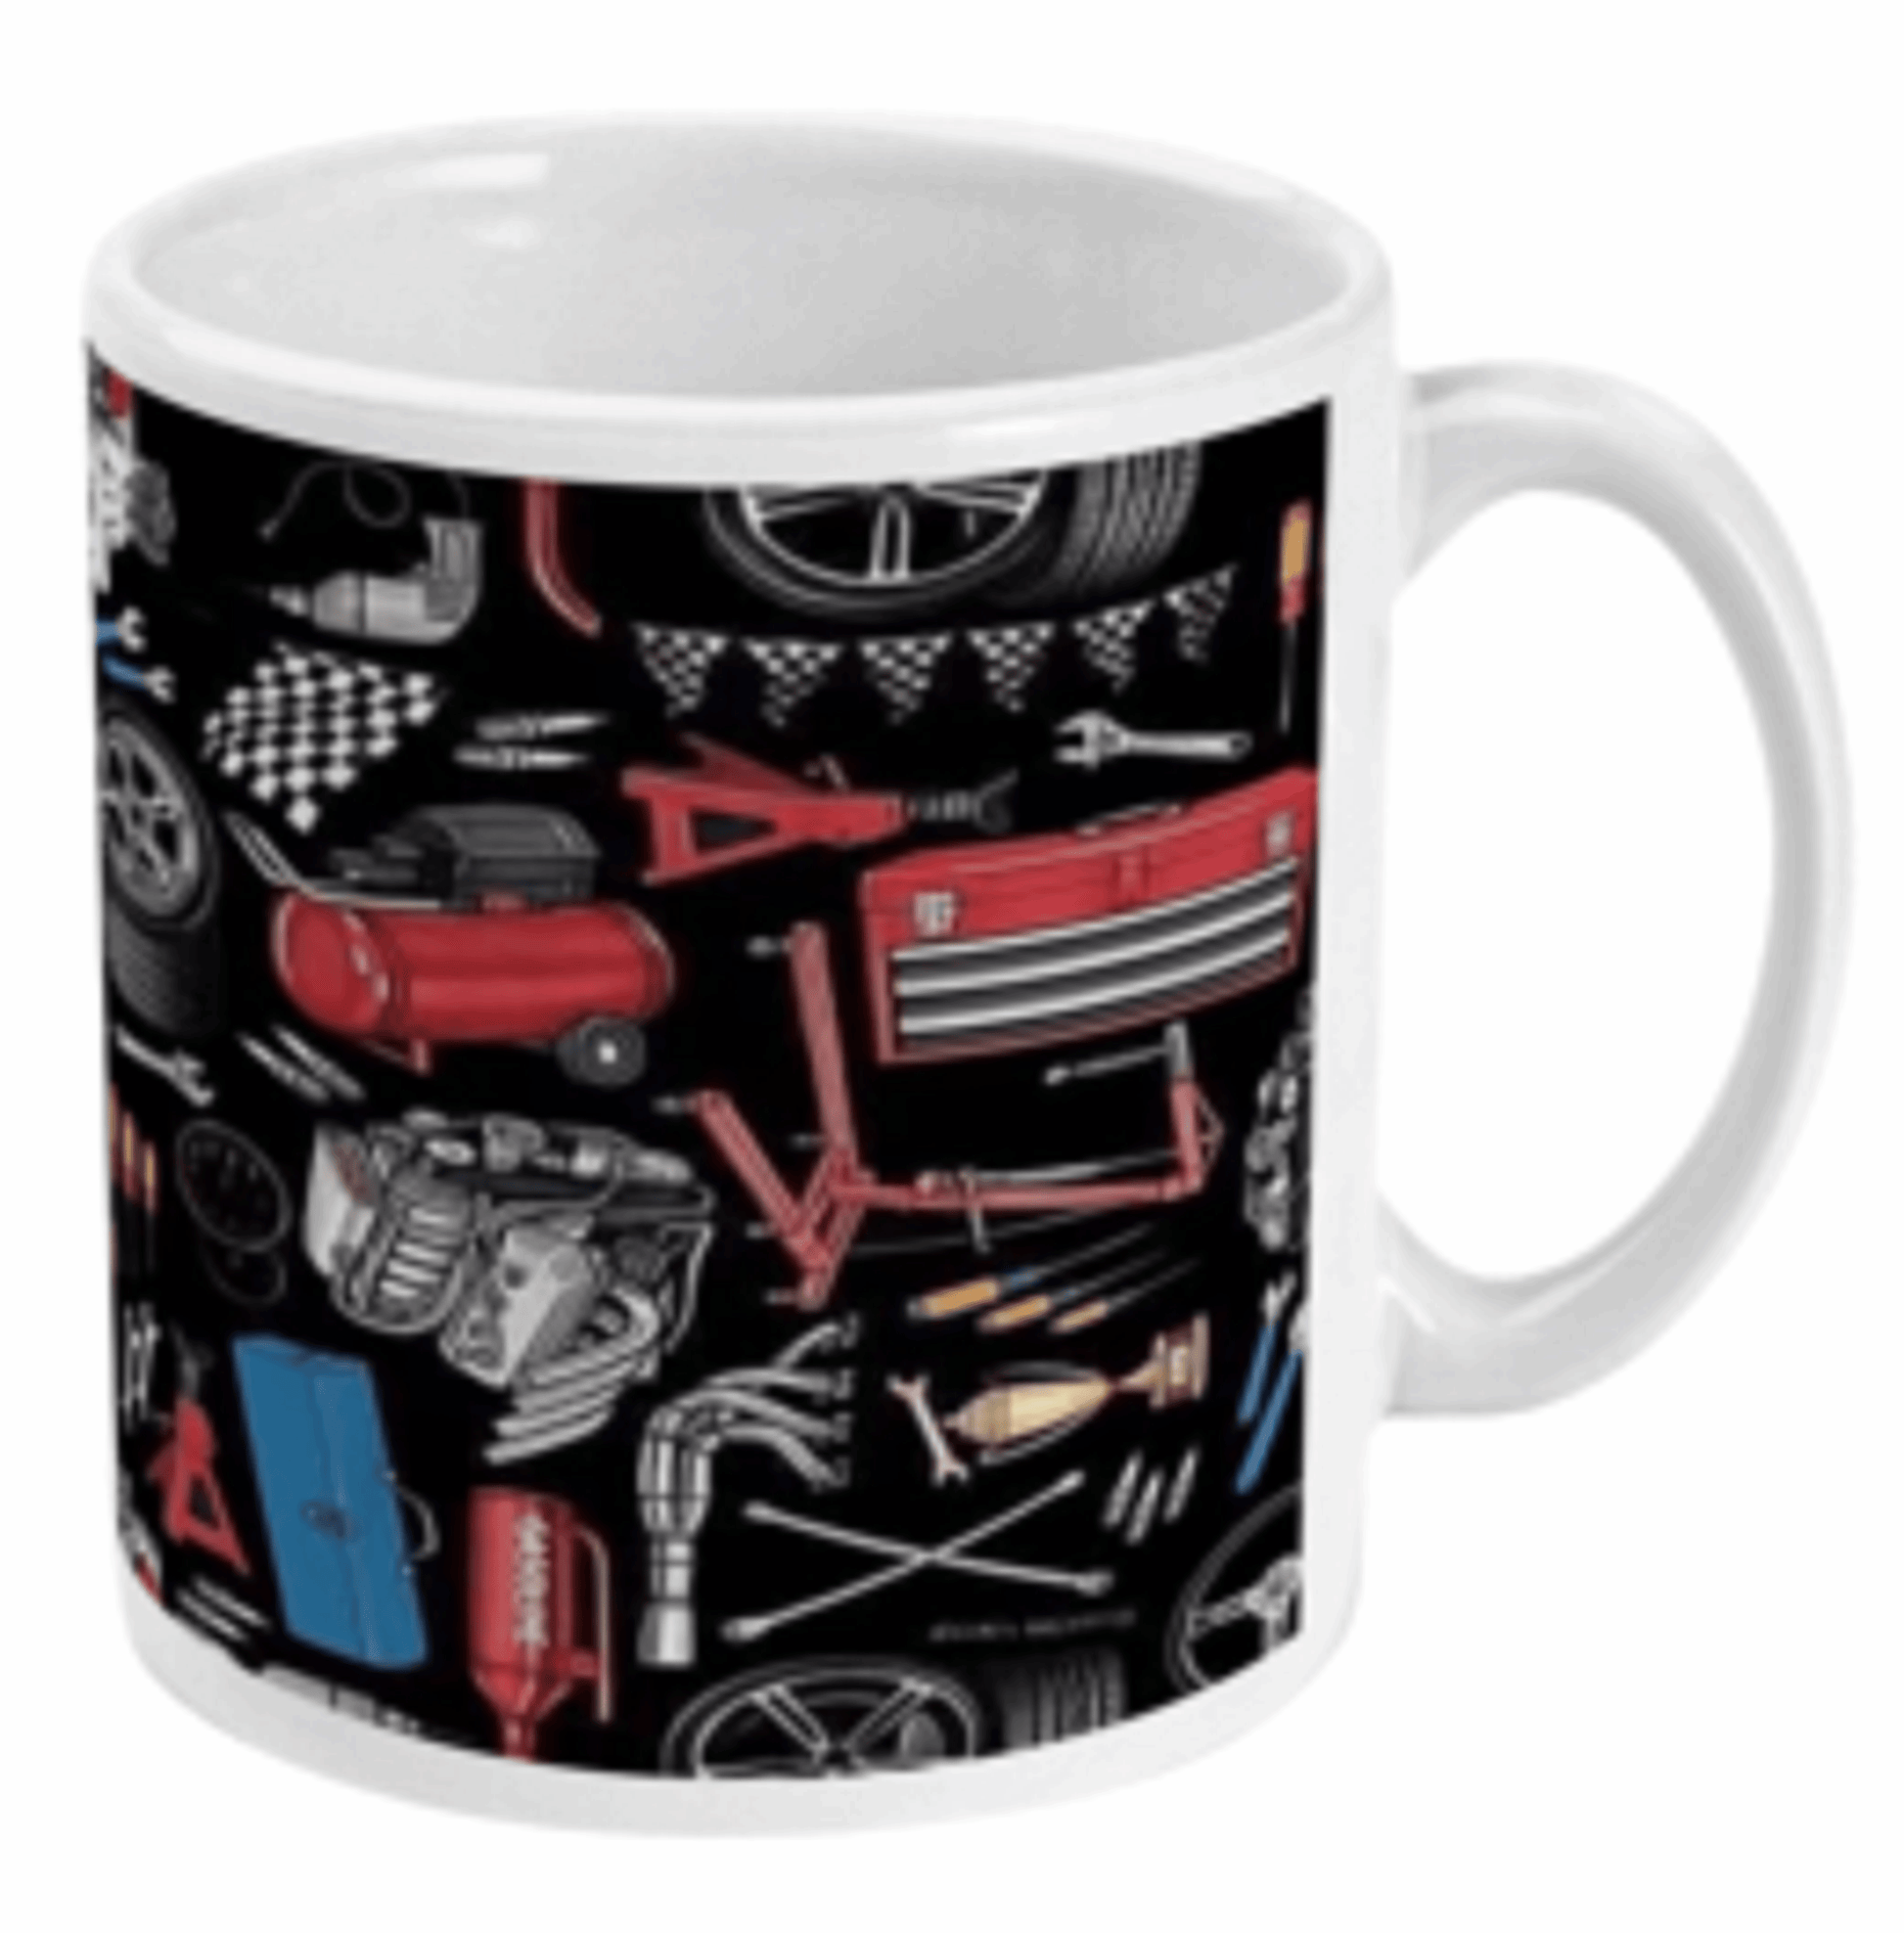  Mechanics Tools Coffee or Tea Mug by Free Spirit Accessories sold by Free Spirit Accessories